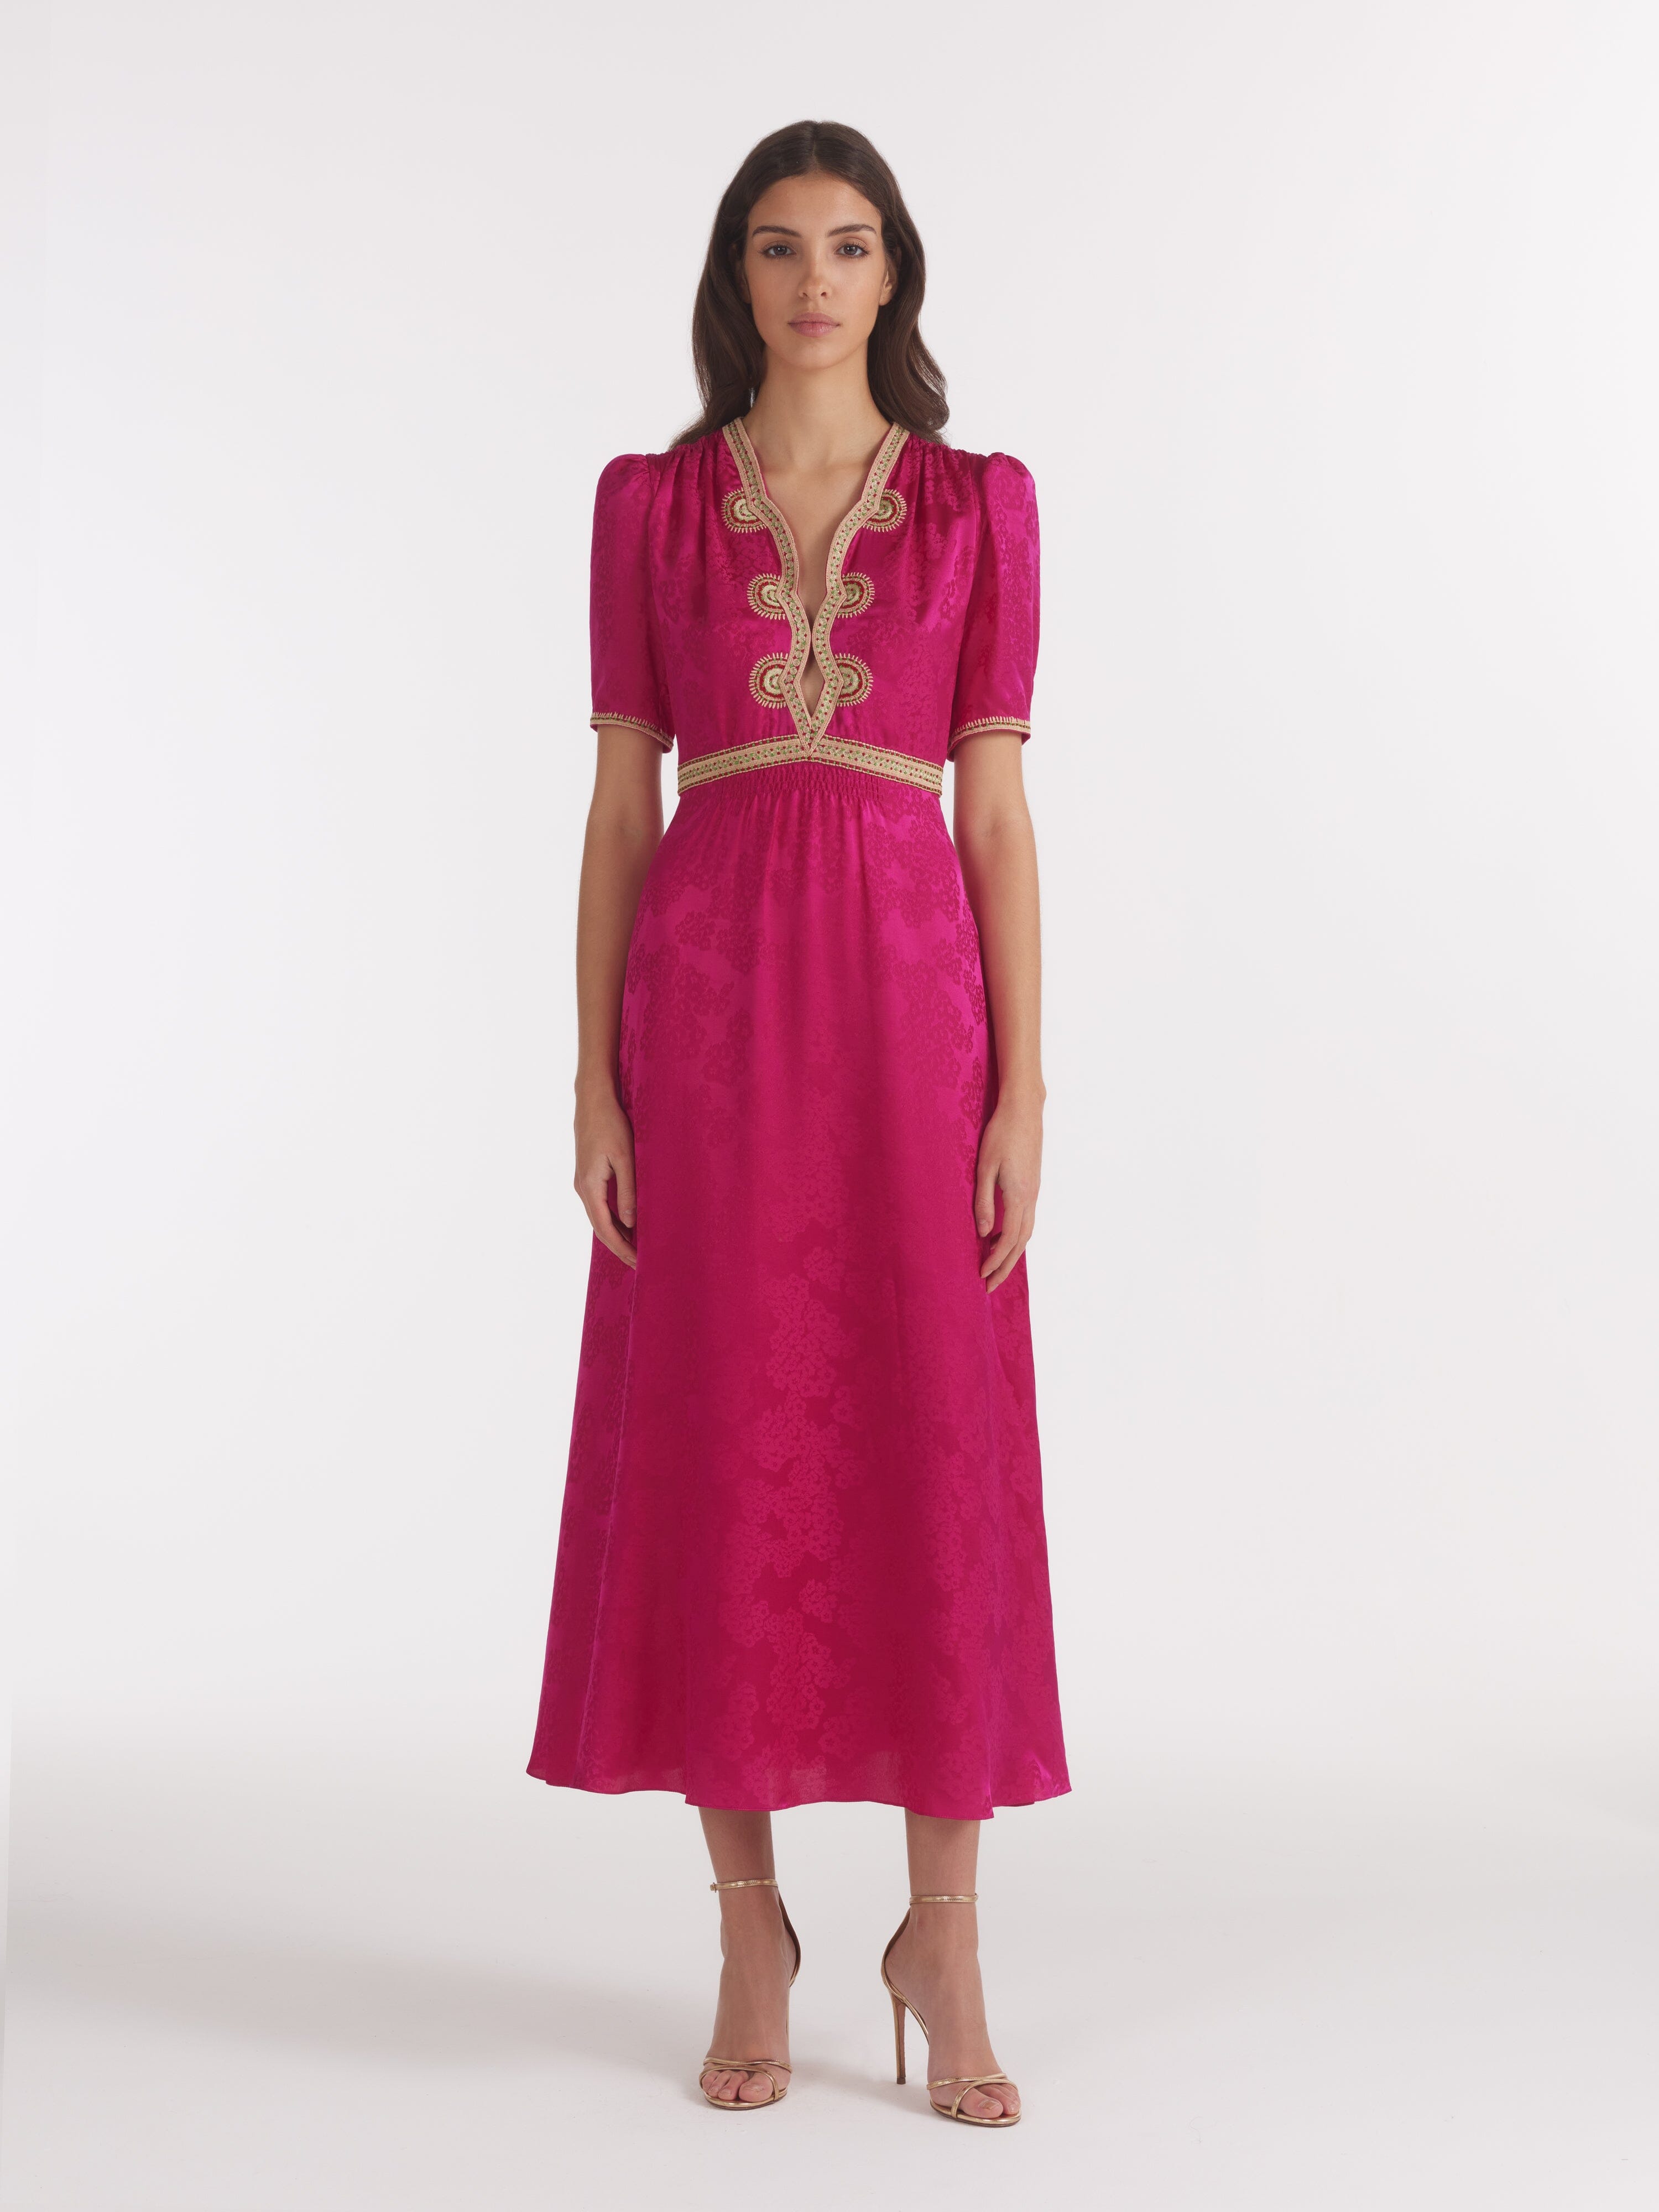 The Azalea Short Sleeve Lace Dress